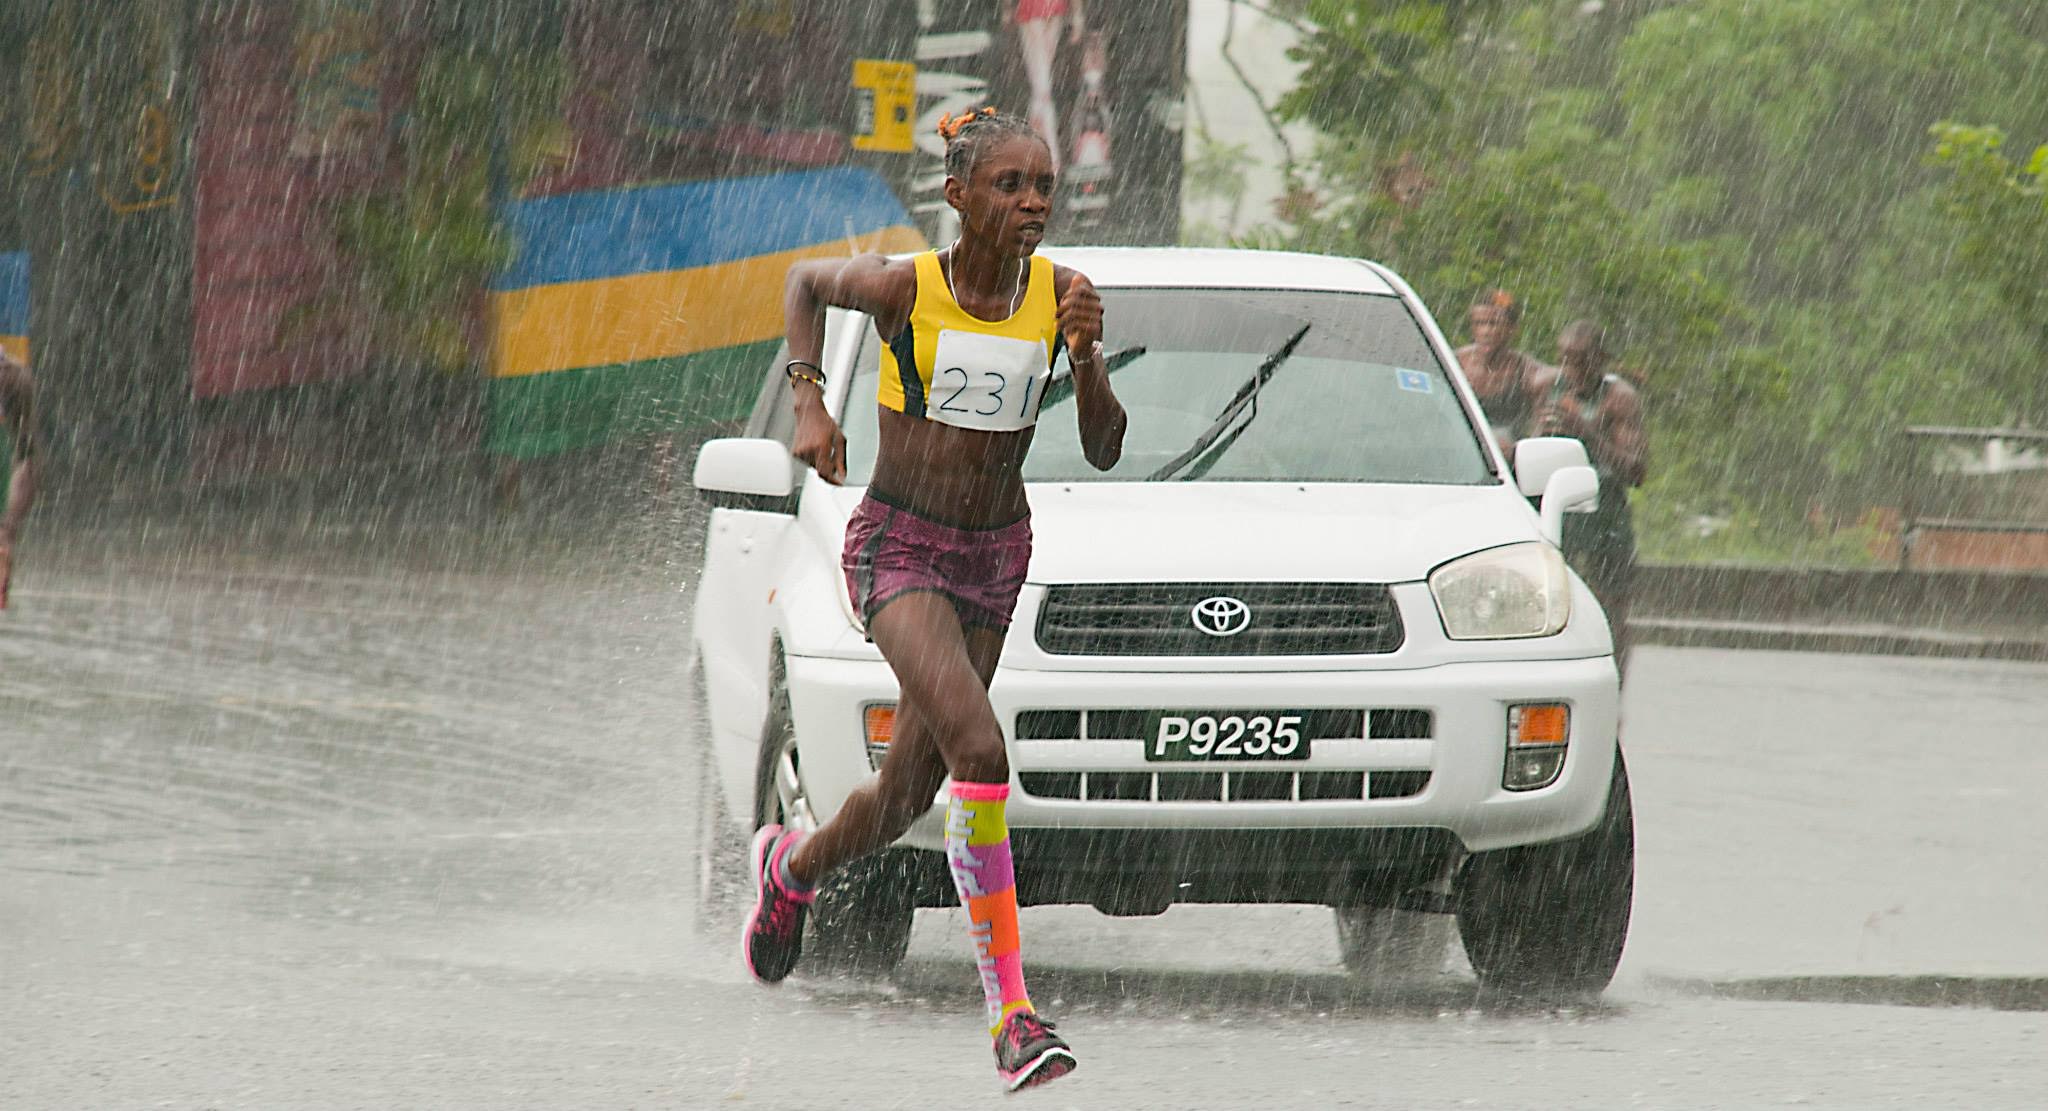 Vincentian athletes shine in Grenada